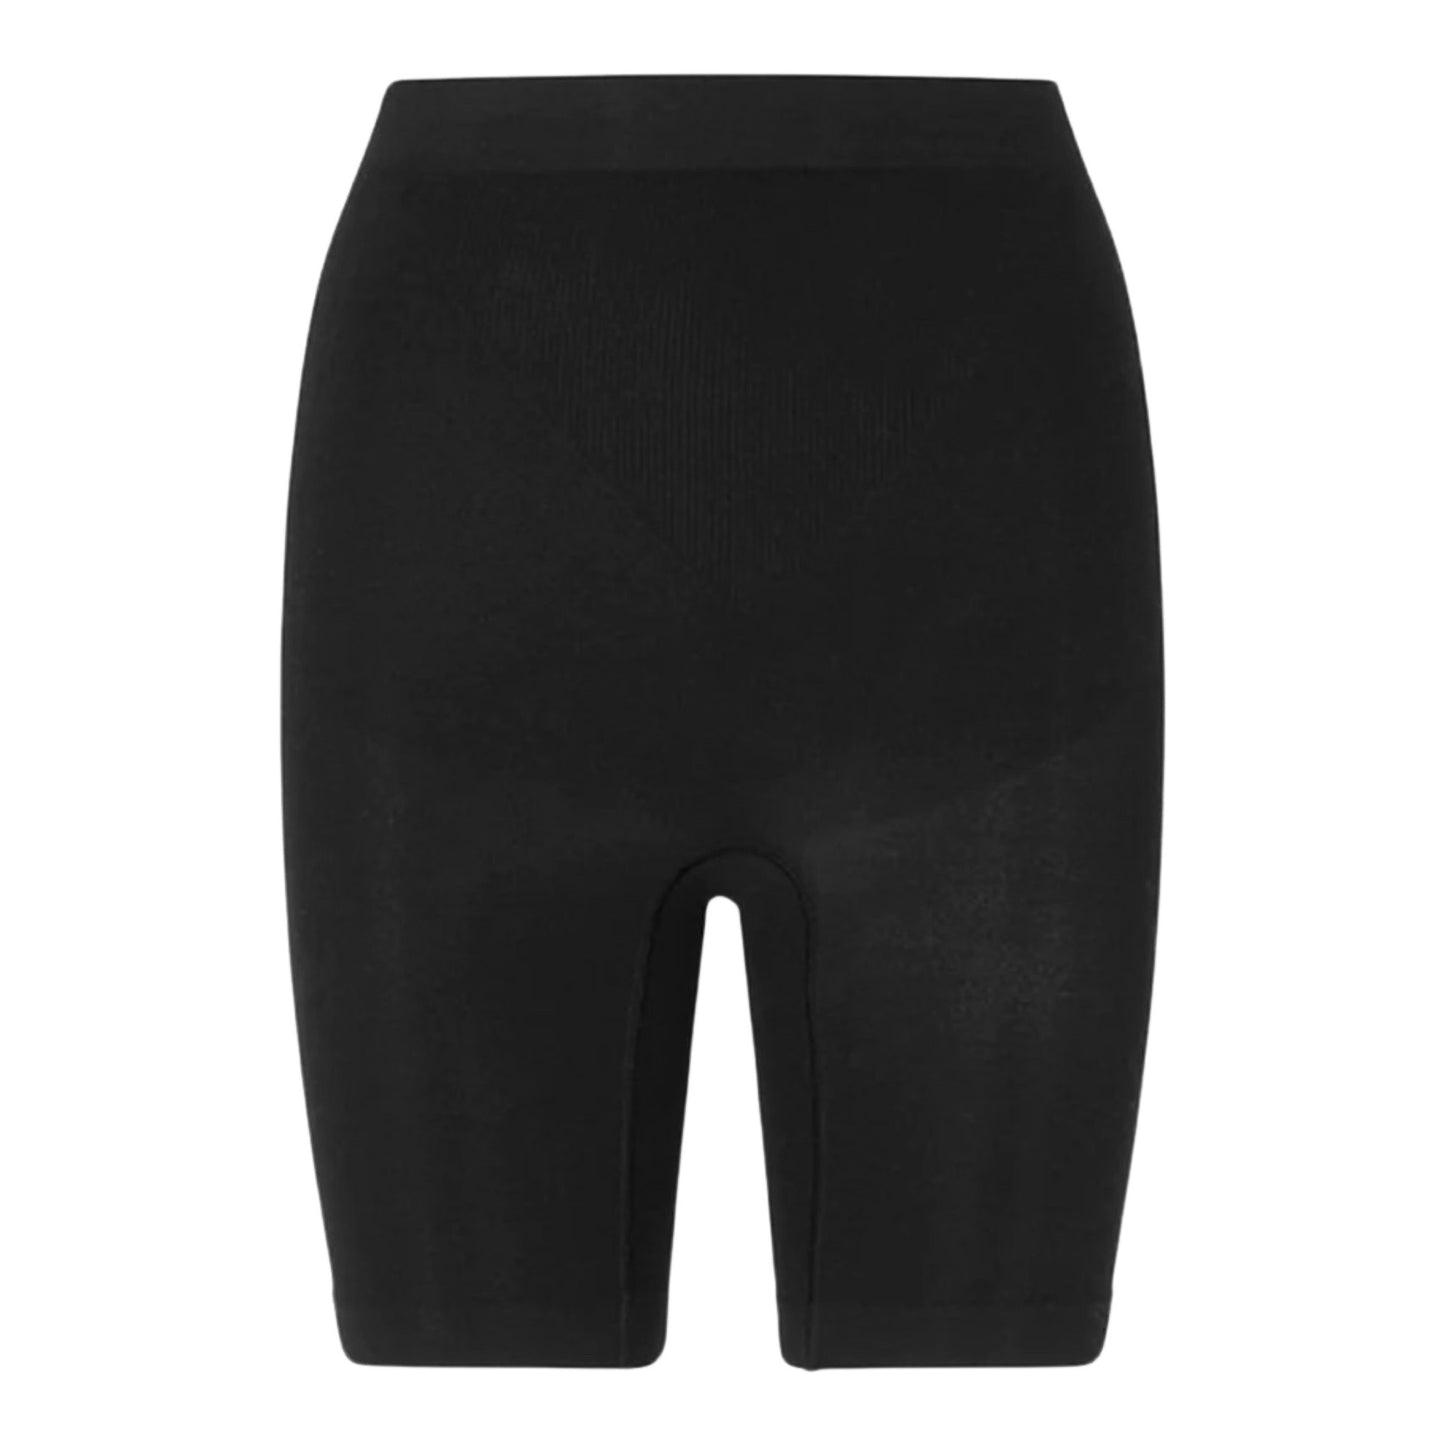 Lykkeland Atelier - Alturra highwaist shaping shorts - Black